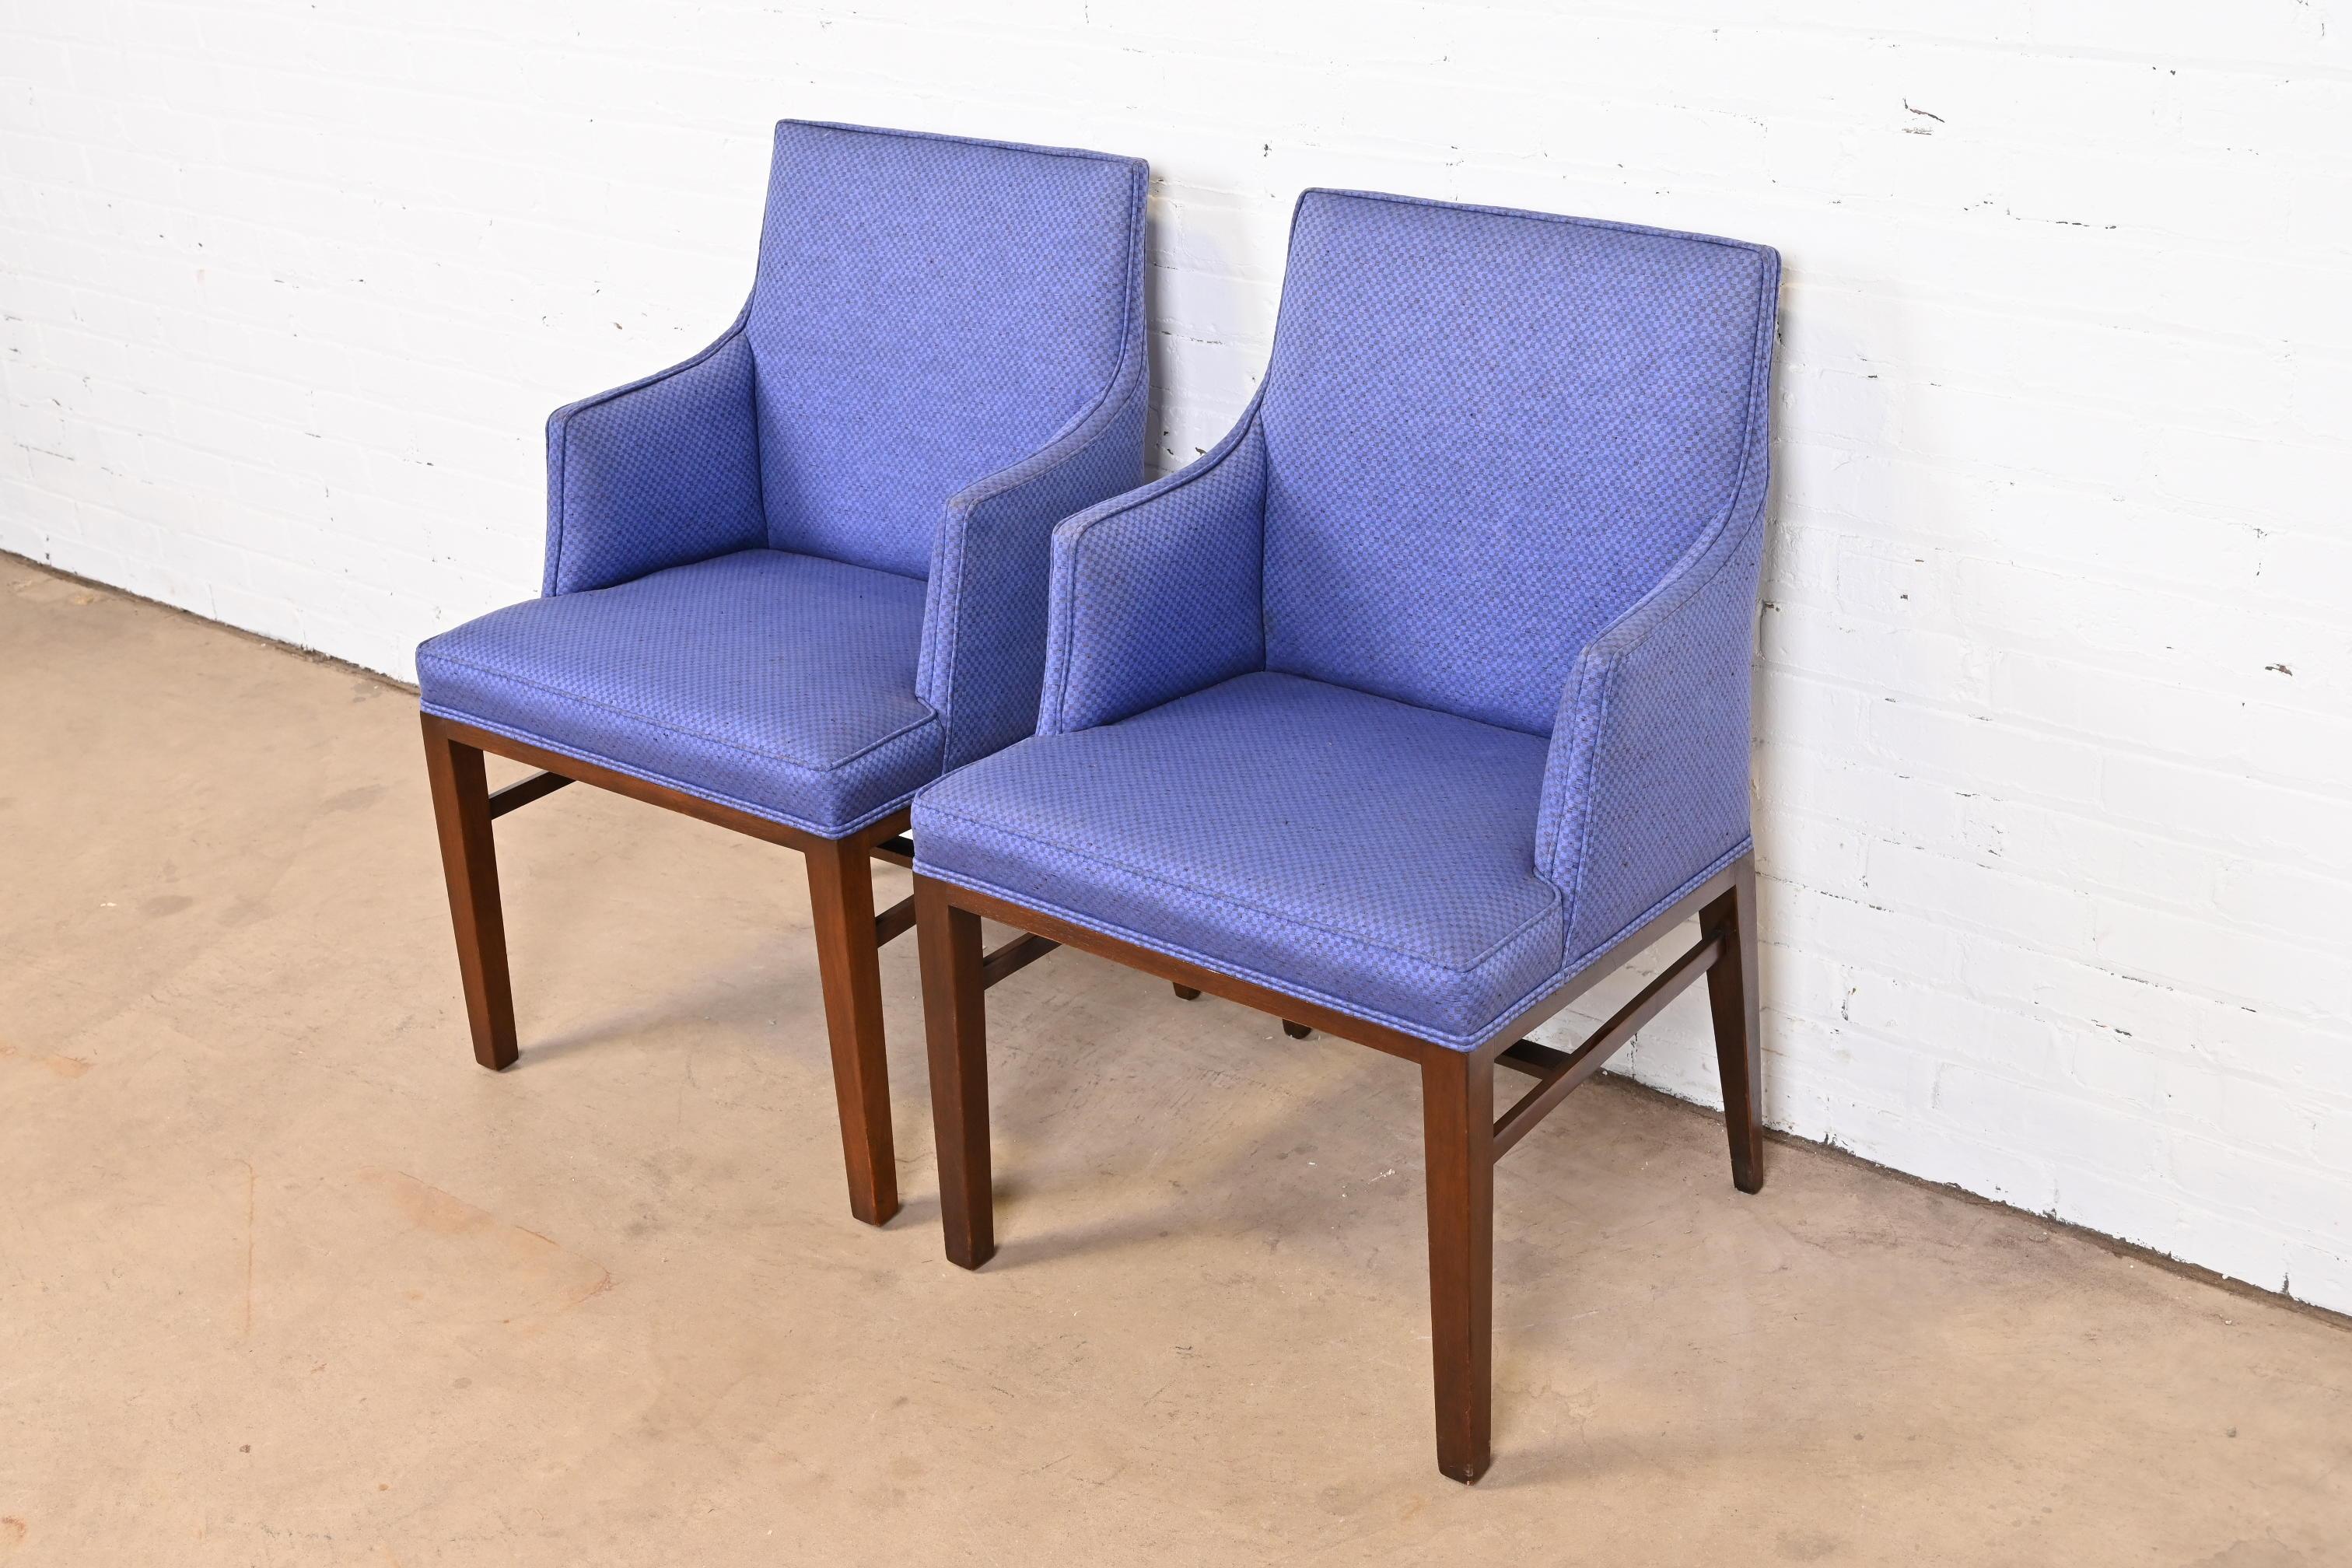 American Edward Wormley for Dunbar Mid-Century Modern Arm Chairs, Pair